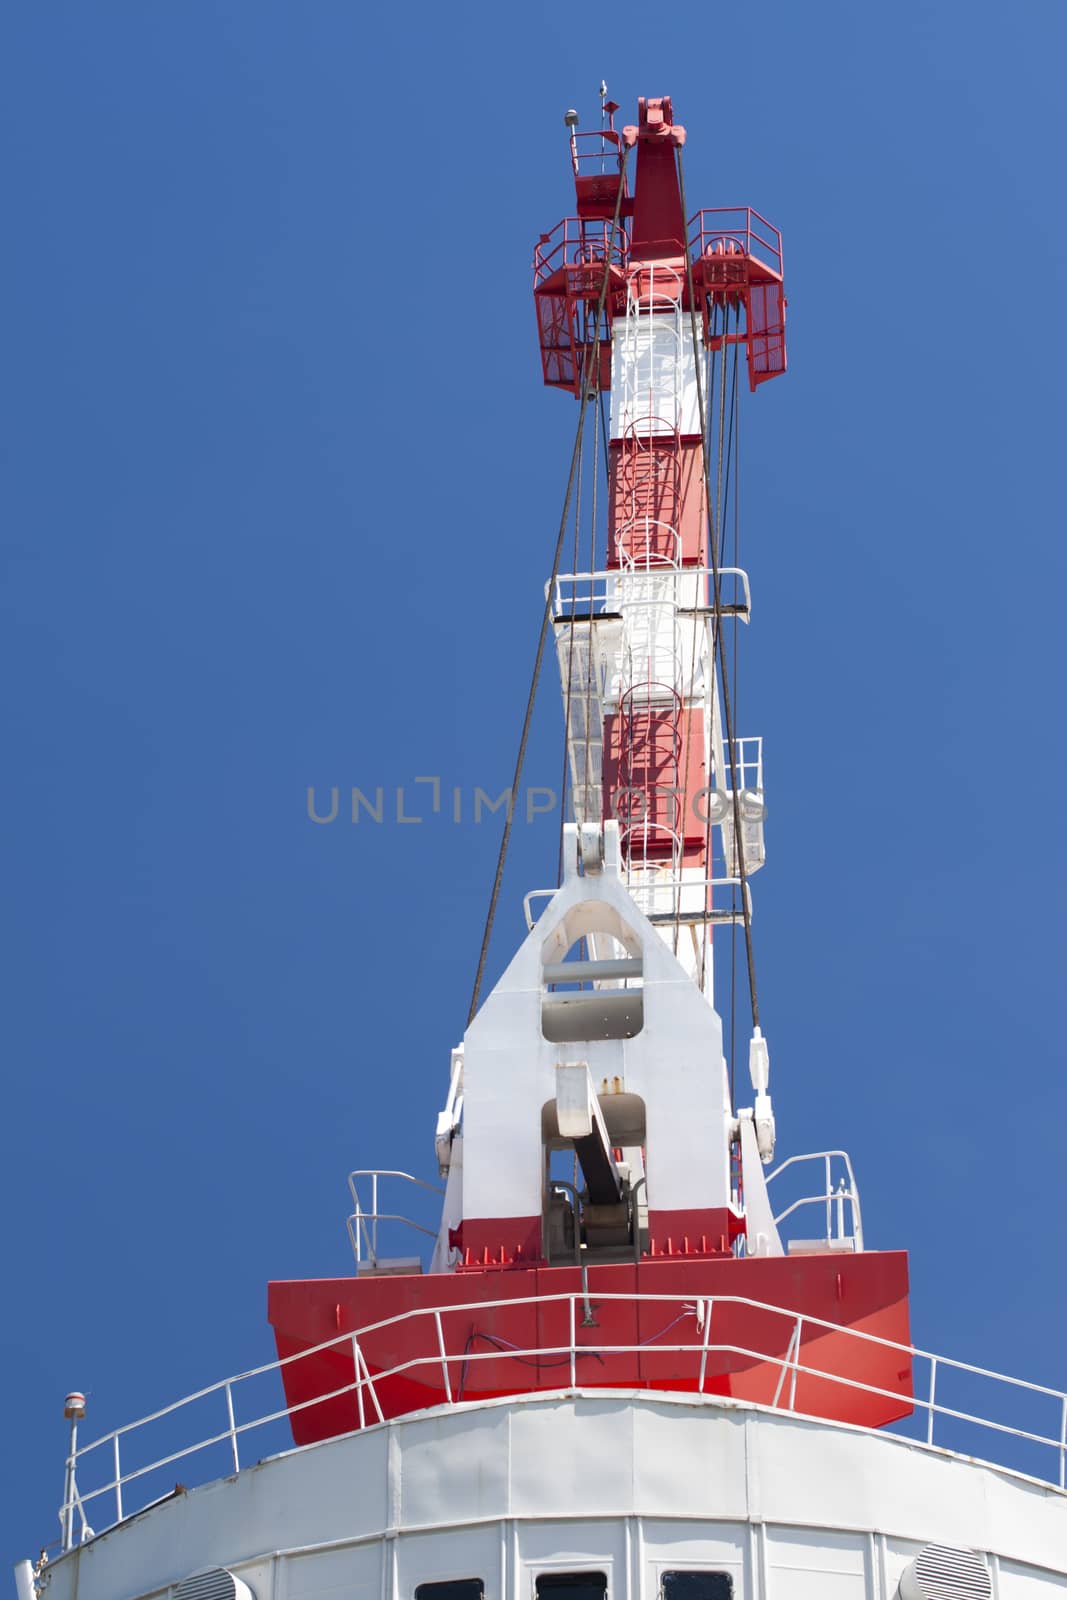 Harbour crane in port by Garsya